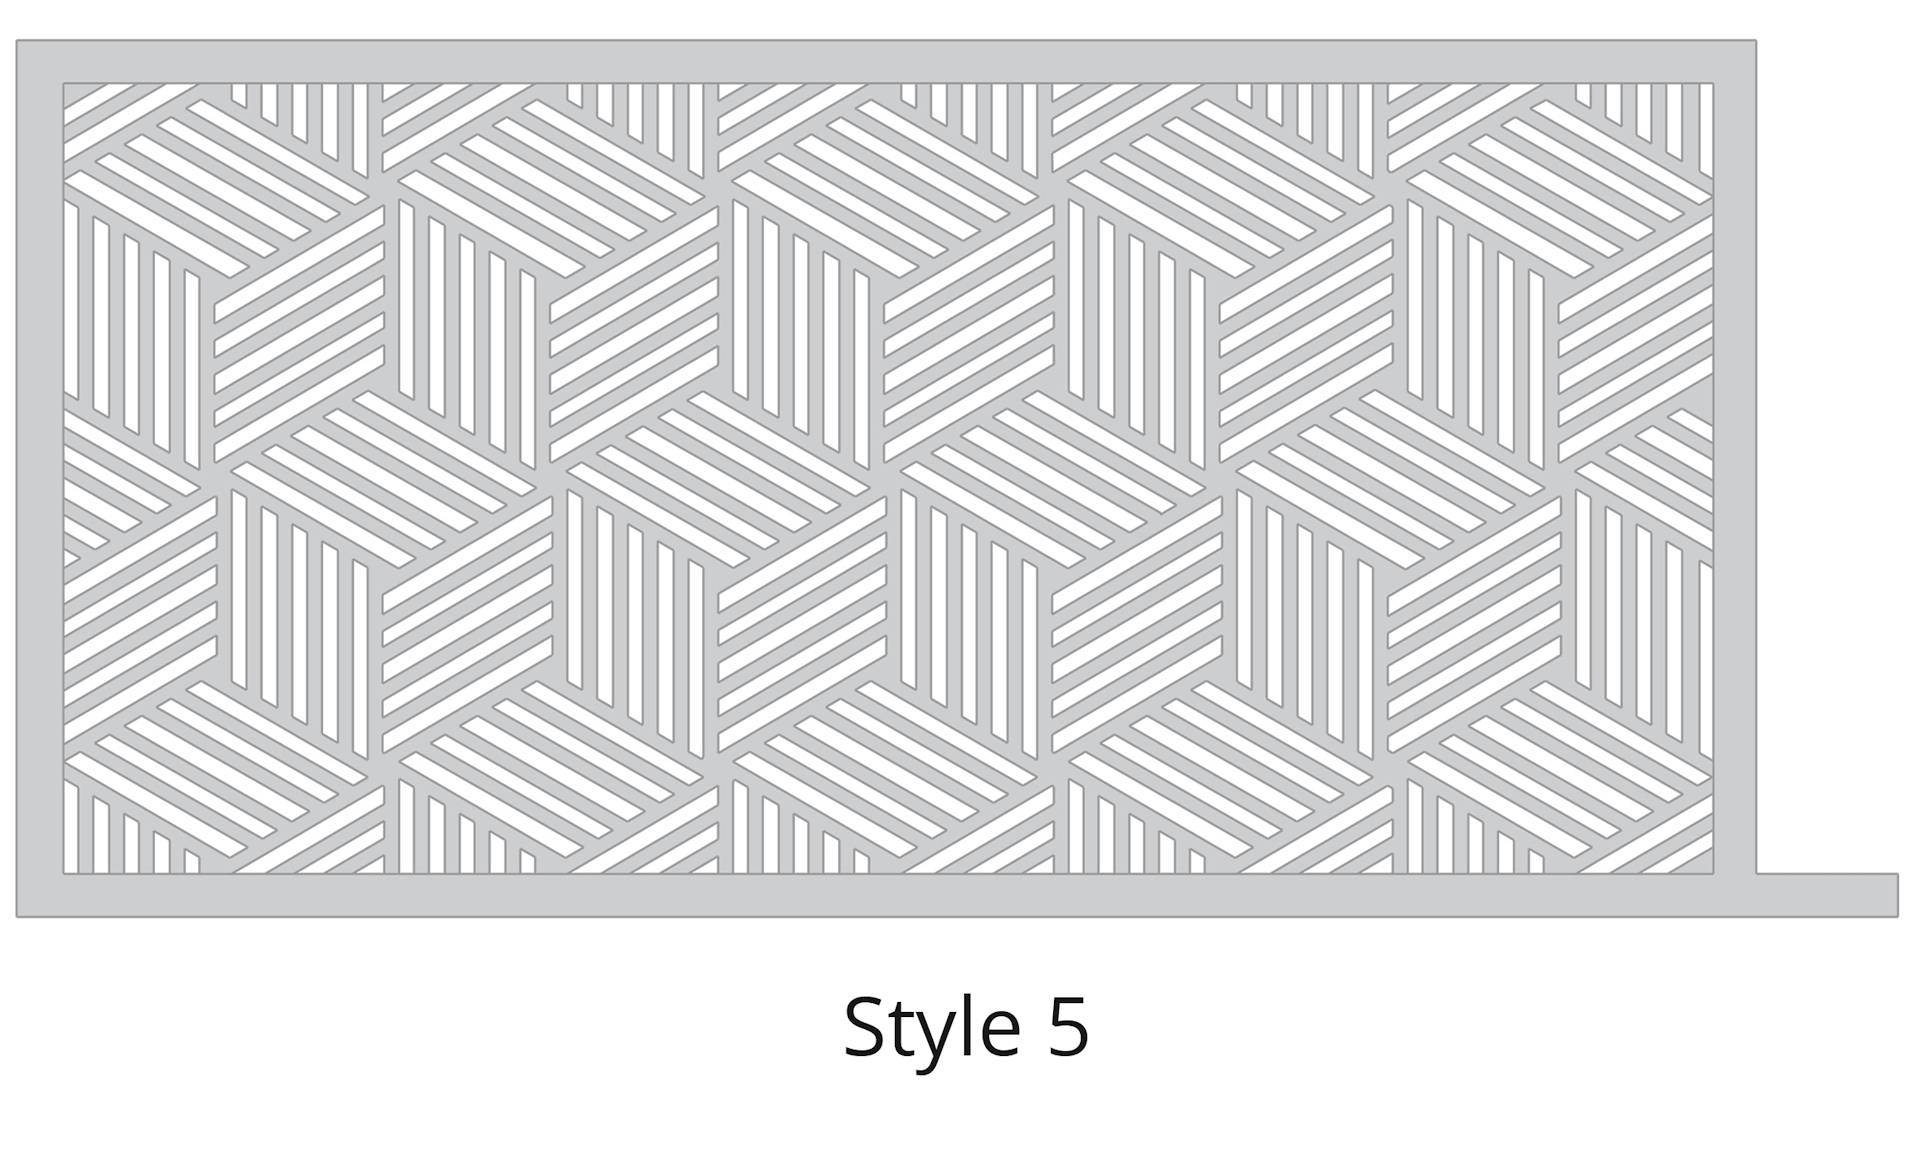 Lazer Cut Gate Design - Style #5